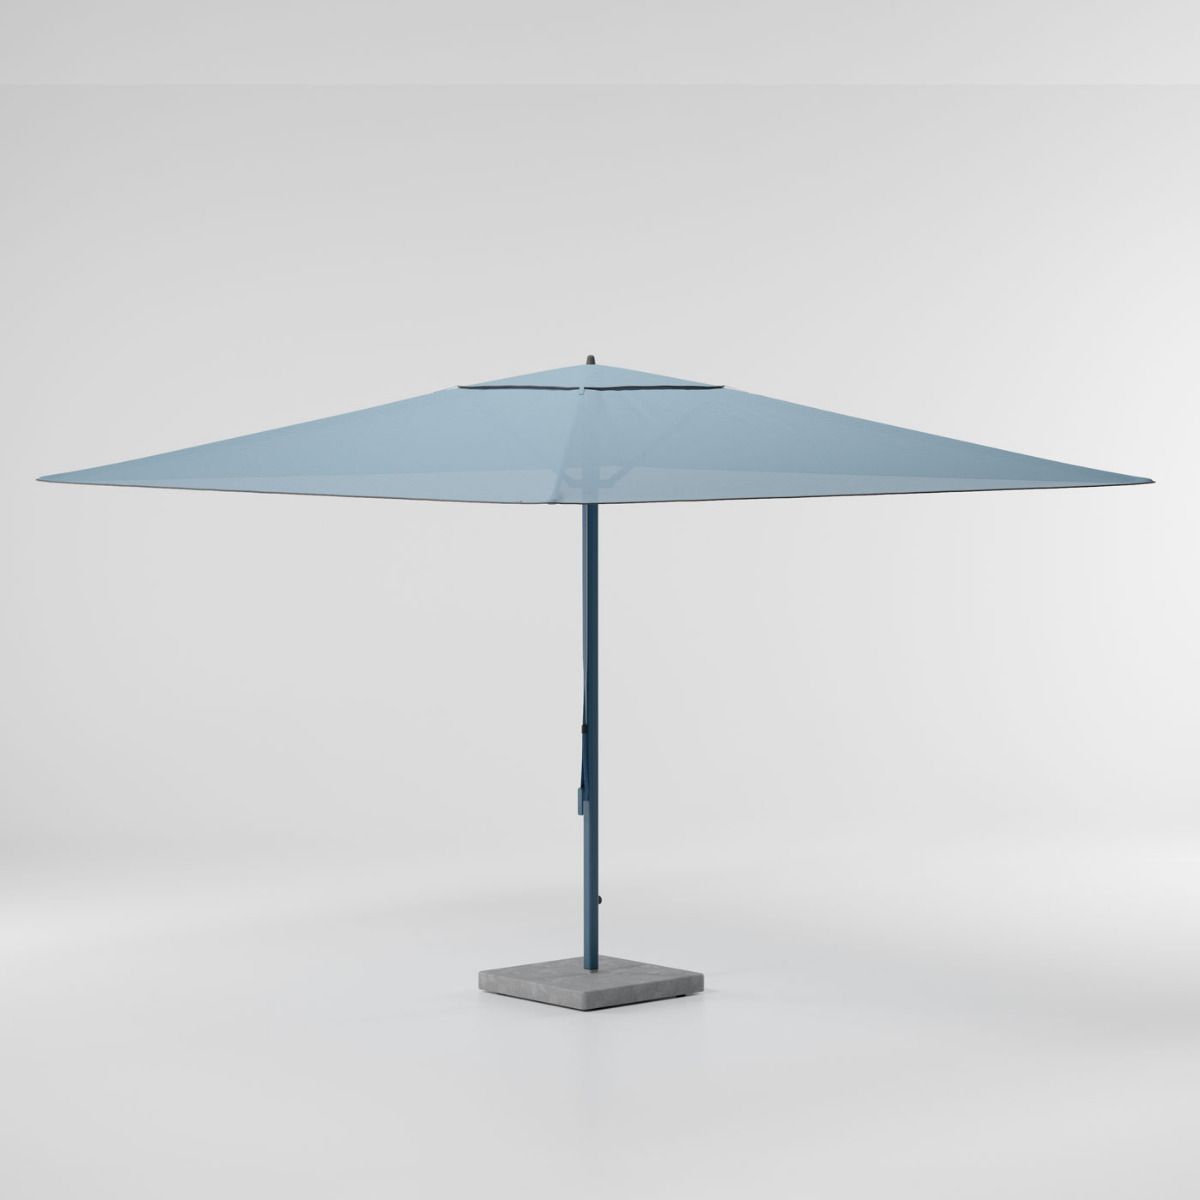 Meteo parasol telescópico L 330 × 330